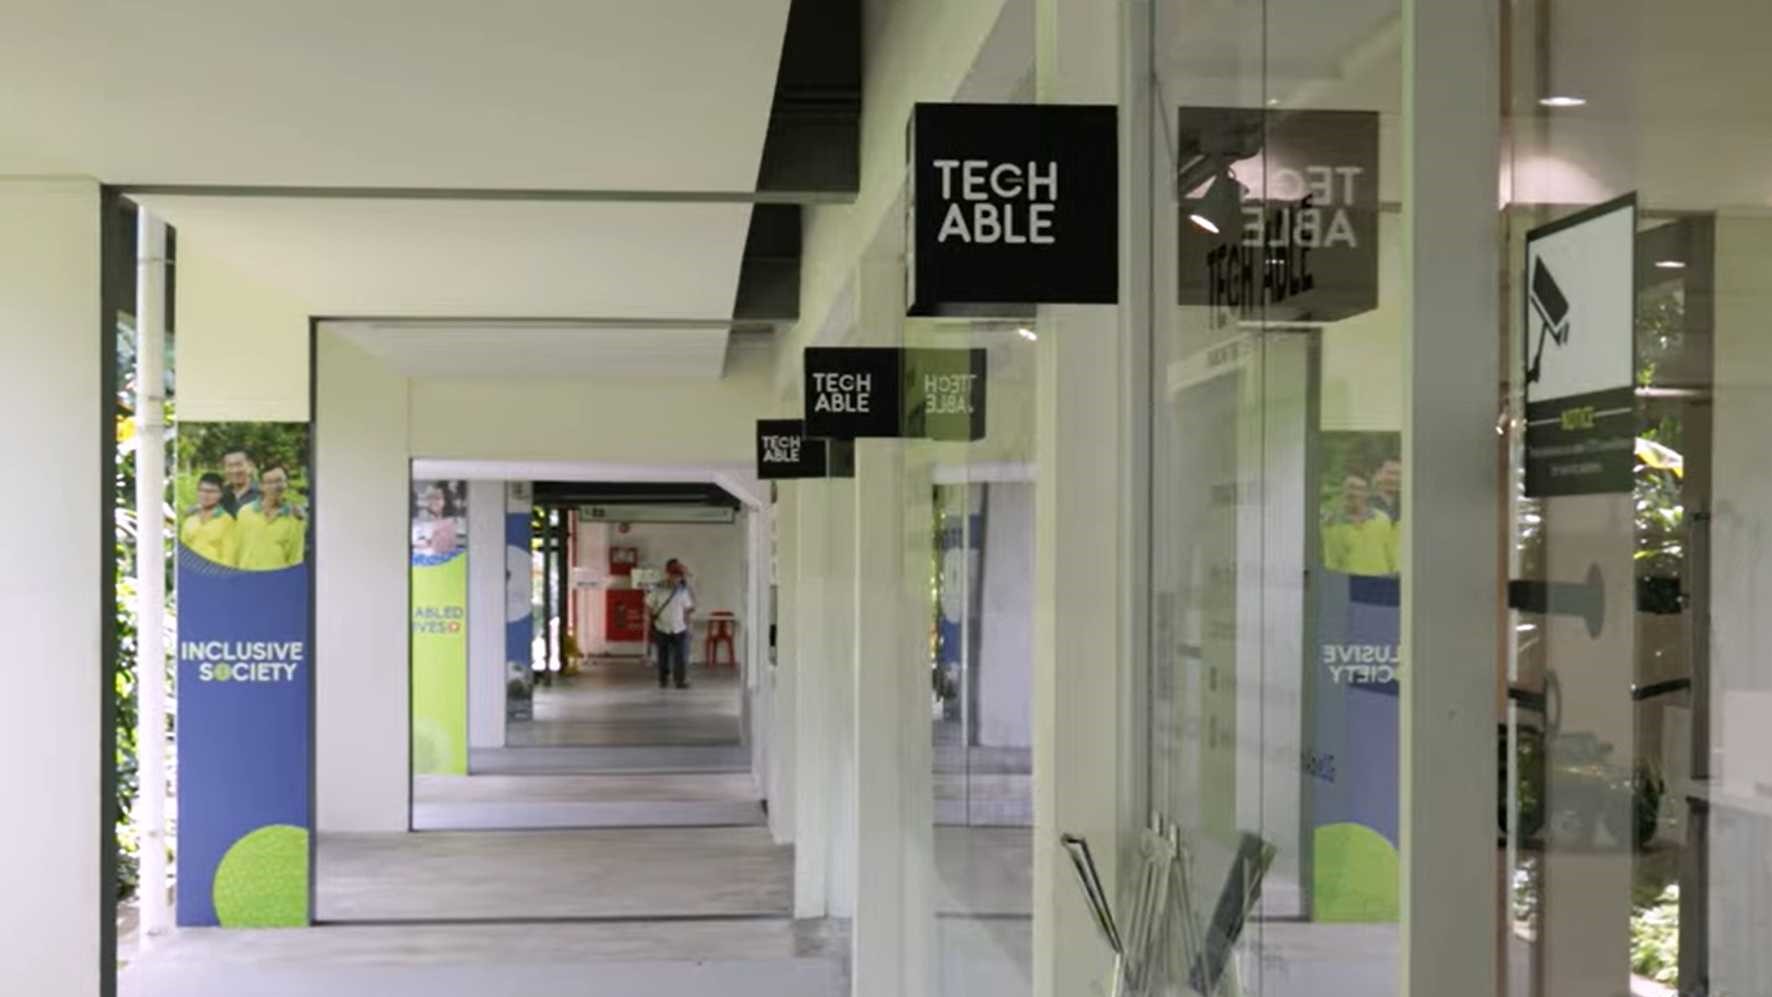 Facade of Tech Able showcase centre with glass doors and along a corridor on the right.